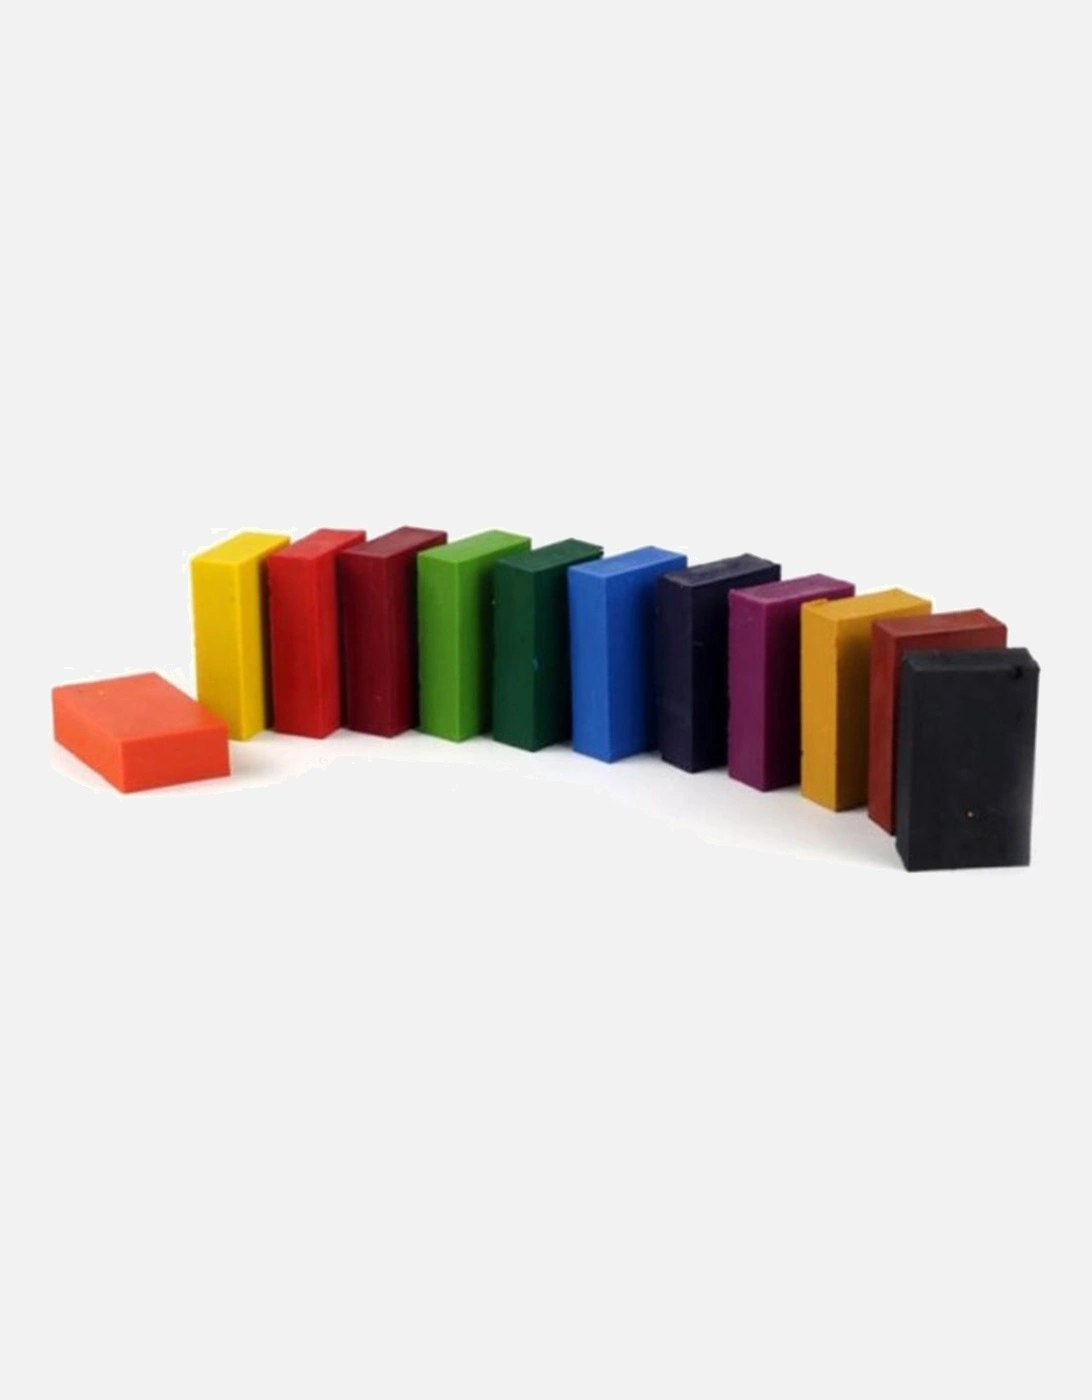 okoNORM Nawaro Wax Blocks, 12 Colour Pack